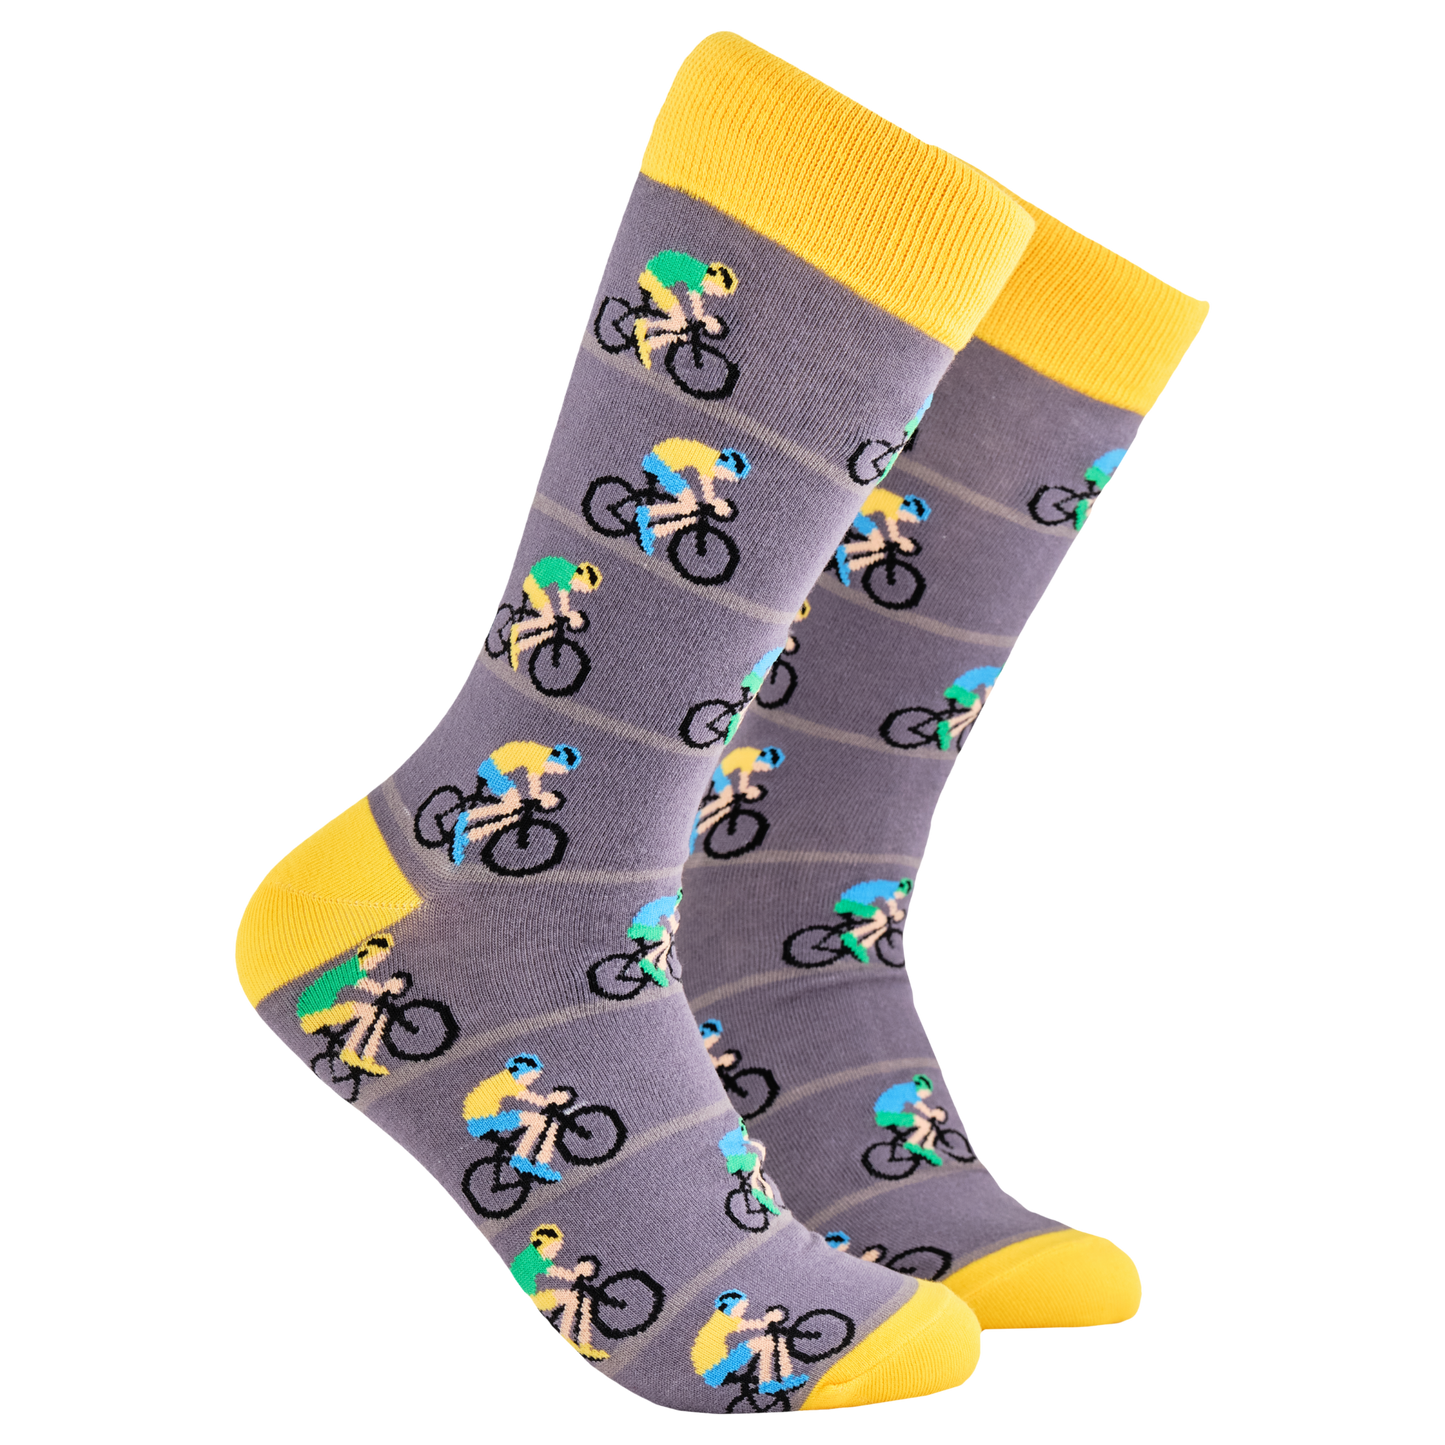 Cycling Socks - Peleton. A pair of socks depicting racing cycles. Grey legs, yellow cuff, heel and toe.